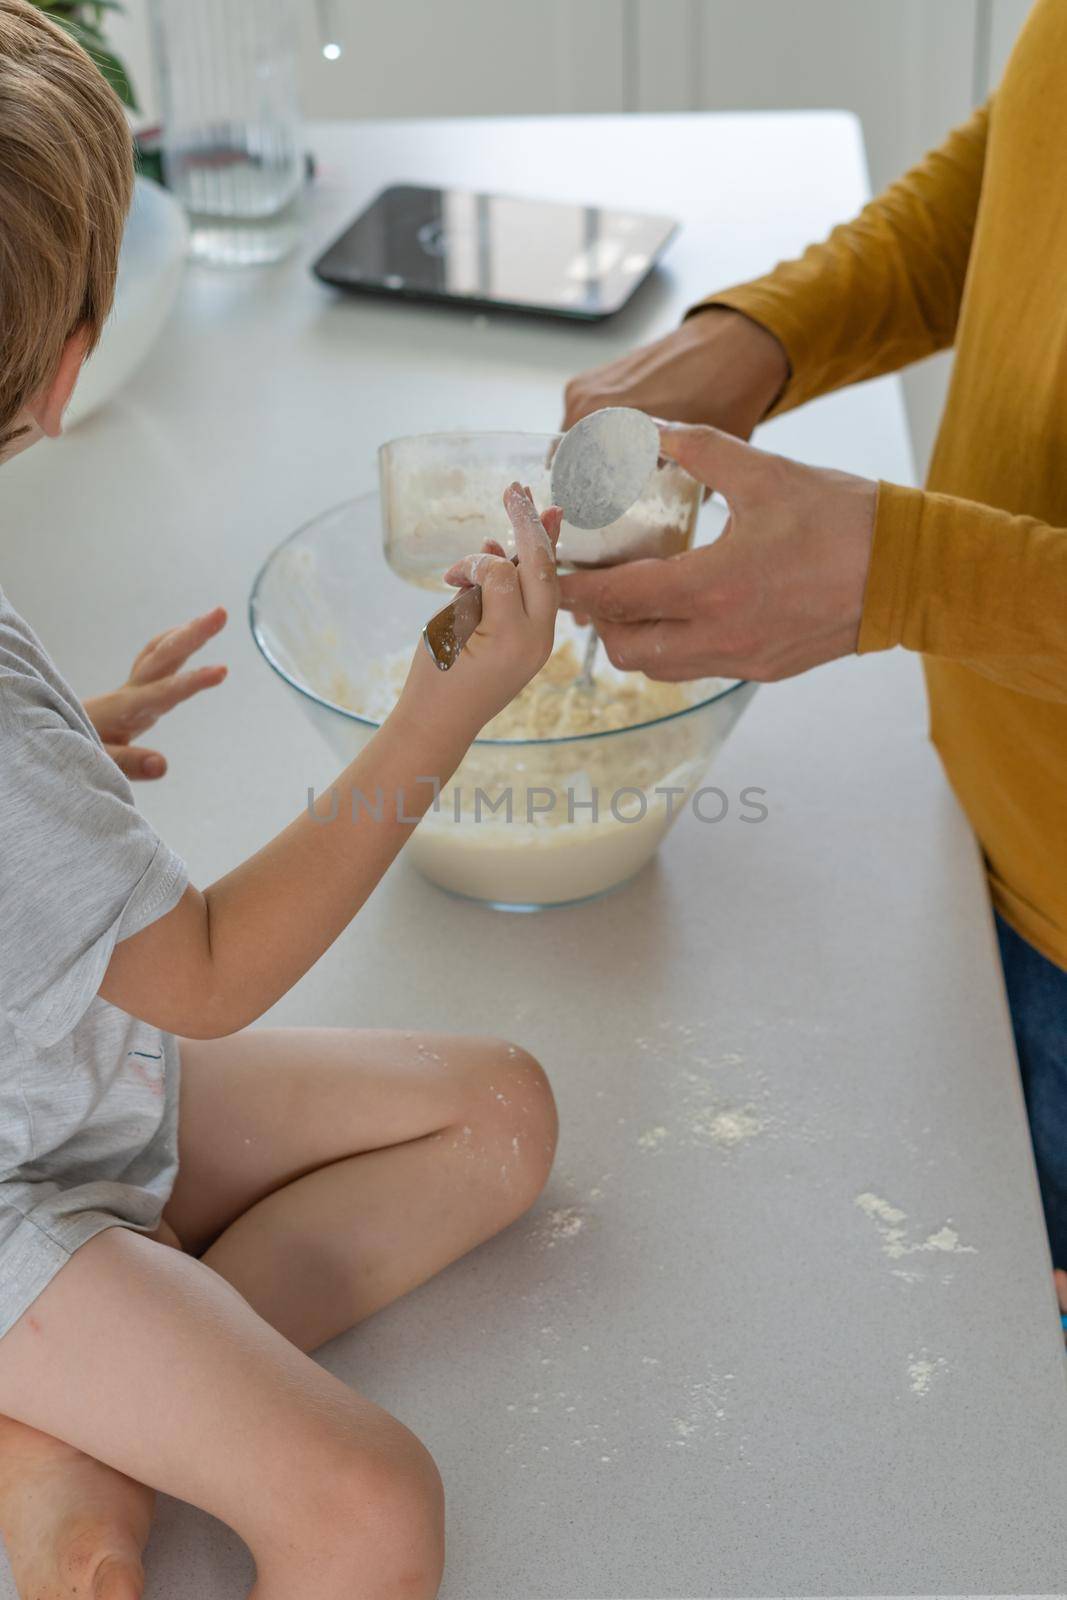 man making homemade bread with his son by joseantona